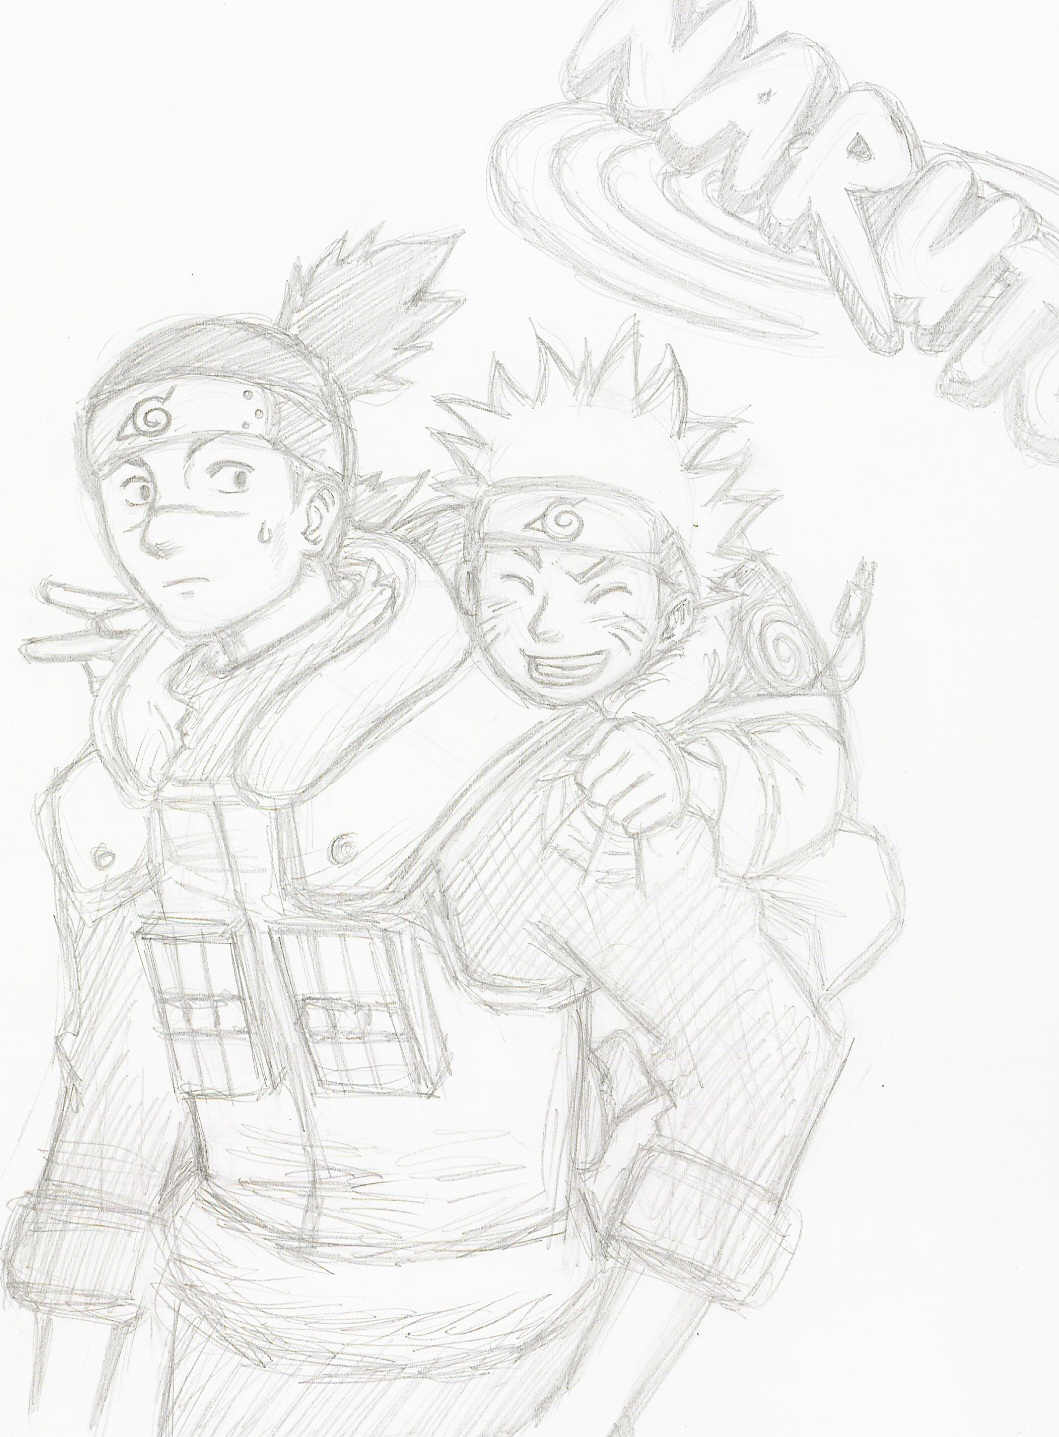 Naruto and Iruka (warm fuzzy feeling) by Karine